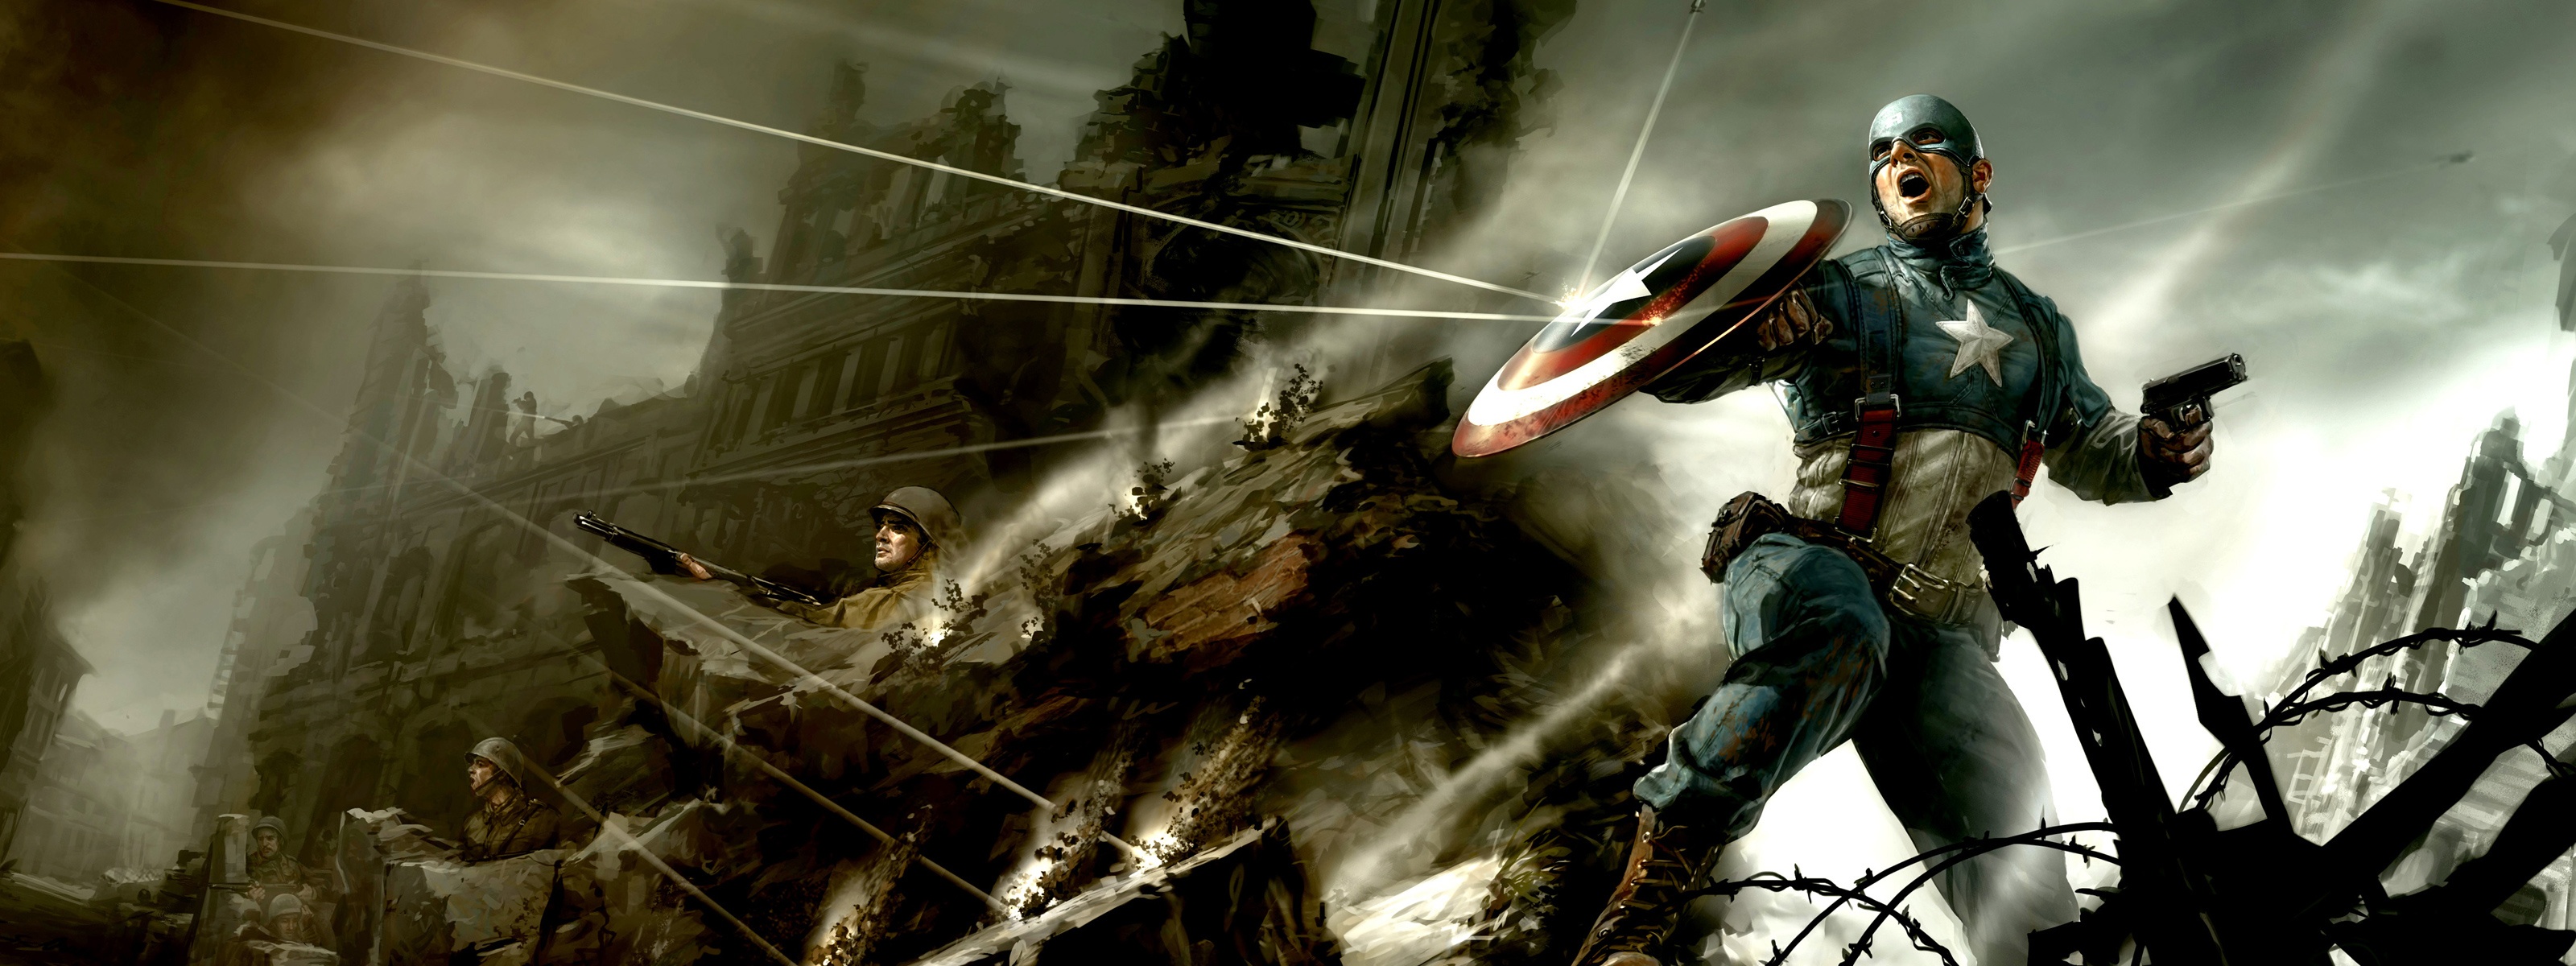 Captain America CG Wallpapers | HD Wallpapers